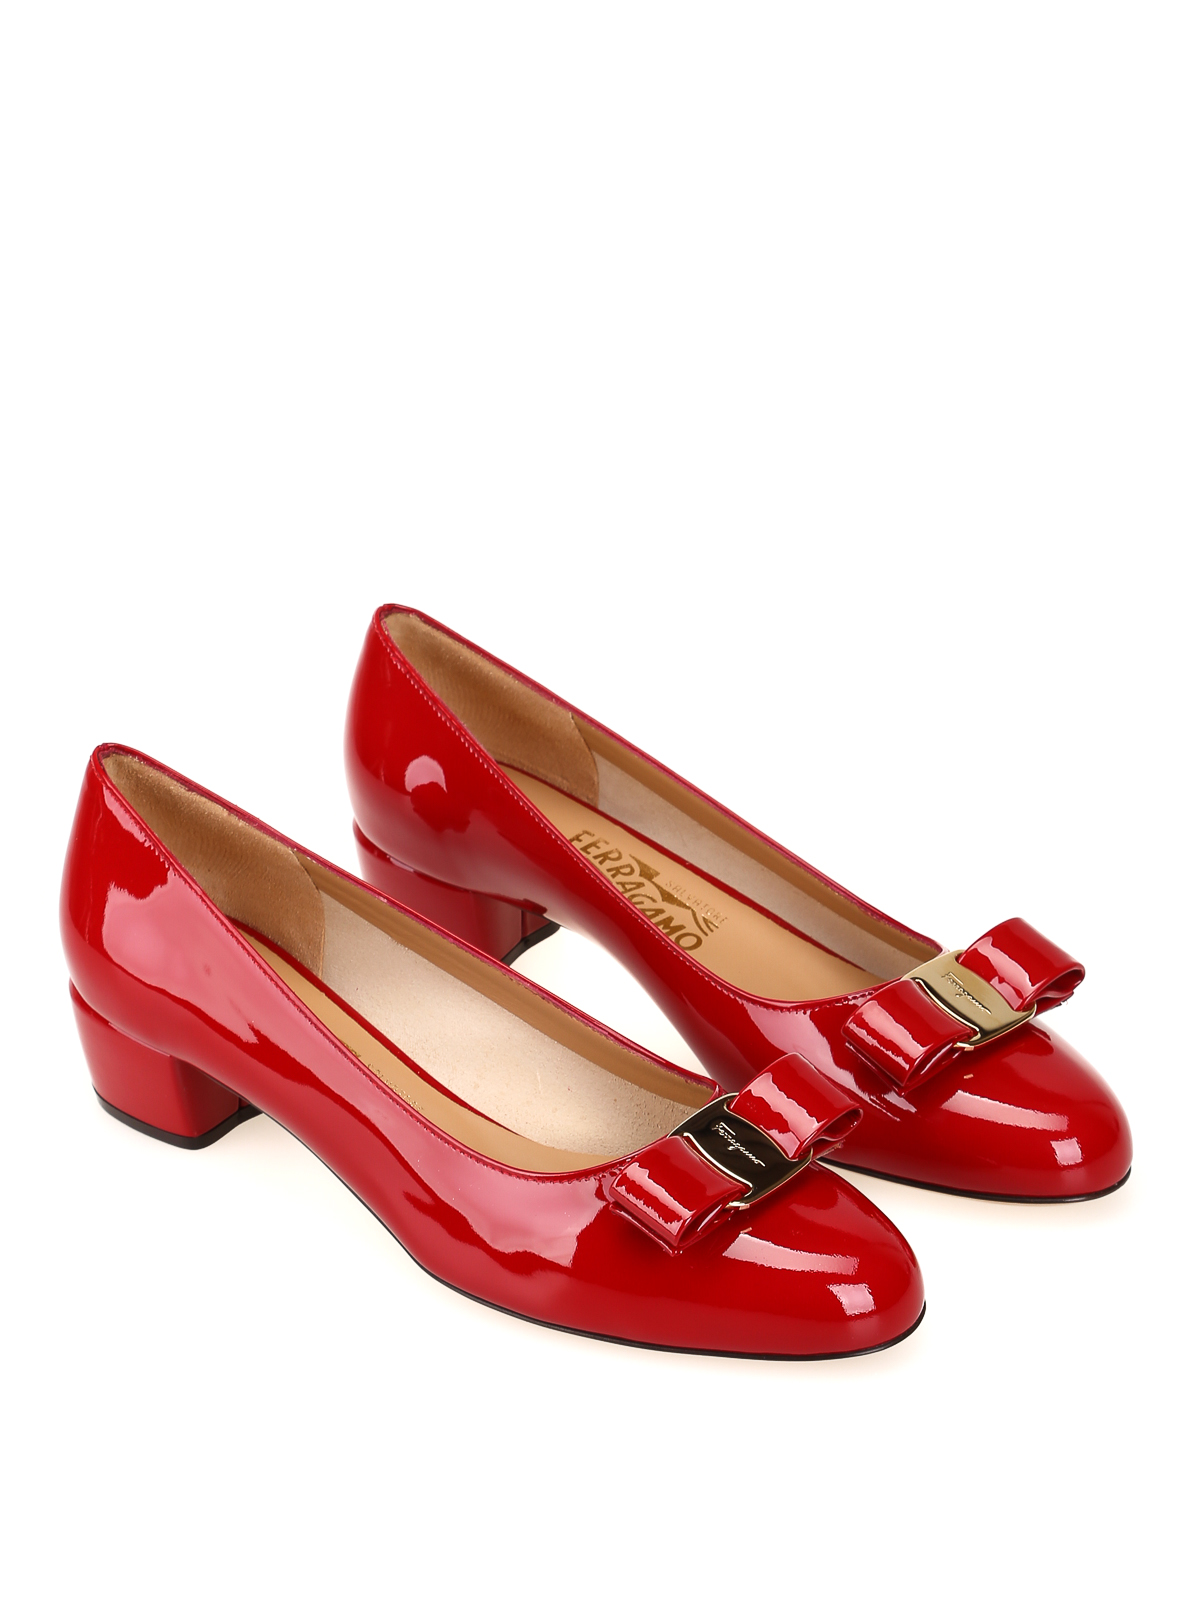 salvatore-ferragamo-online-court-shoes-vara-1-red-patent-leather-pumps -00000147995f00s012.jpg